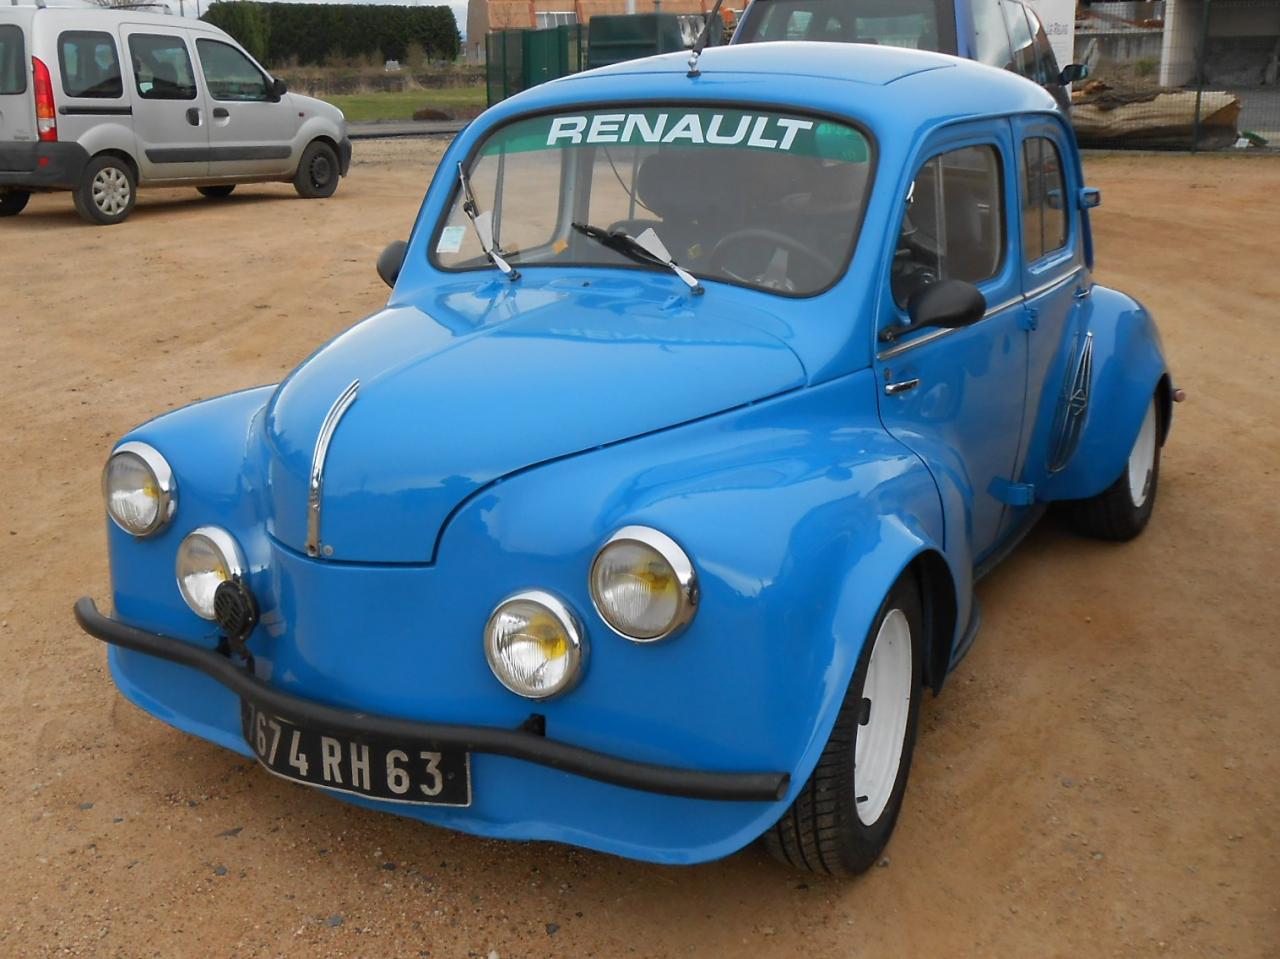 Renault 4 CV proto de Manuel